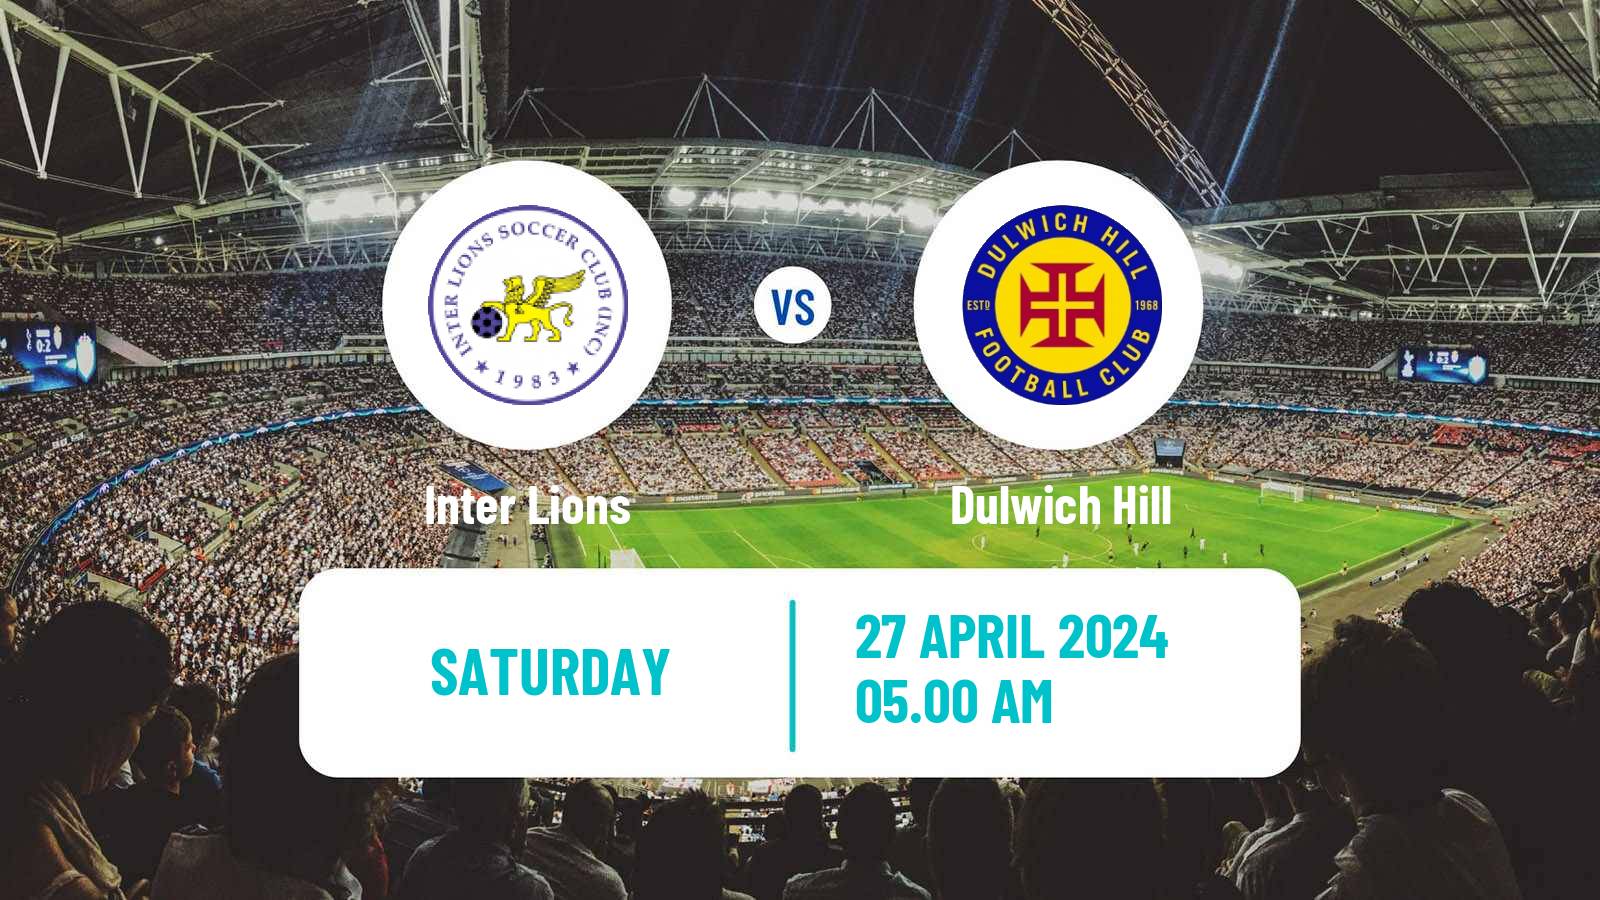 Soccer Australian NSW League One Inter Lions - Dulwich Hill